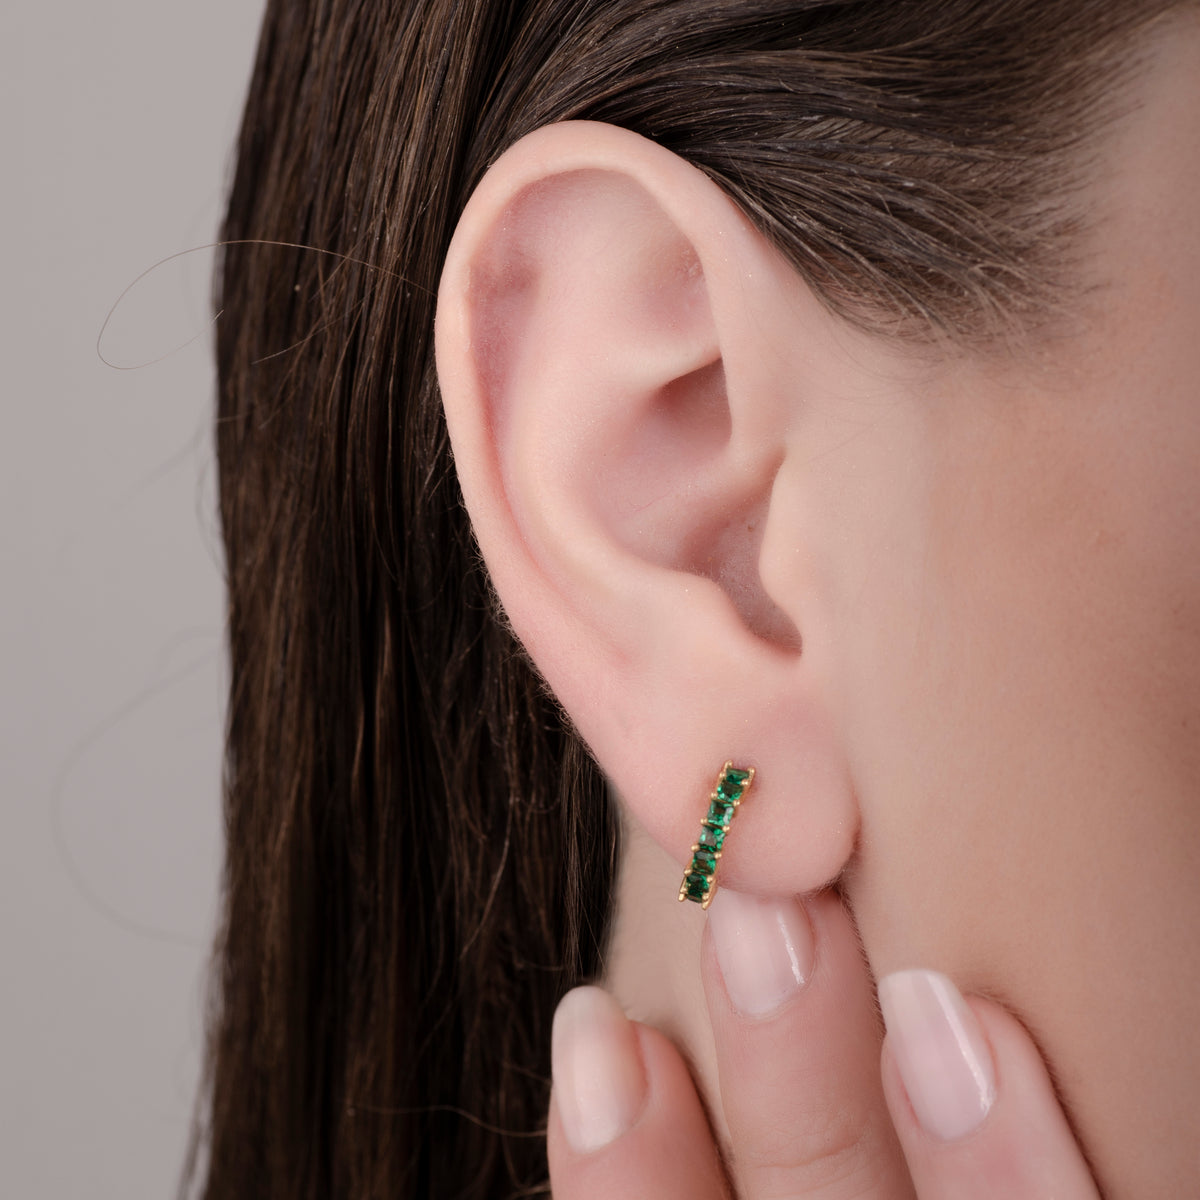 Helen Emerald 24K Gold Earrings - Gold Vermeil Earrings - Pretland | Spiritual Crystals & Jewelry